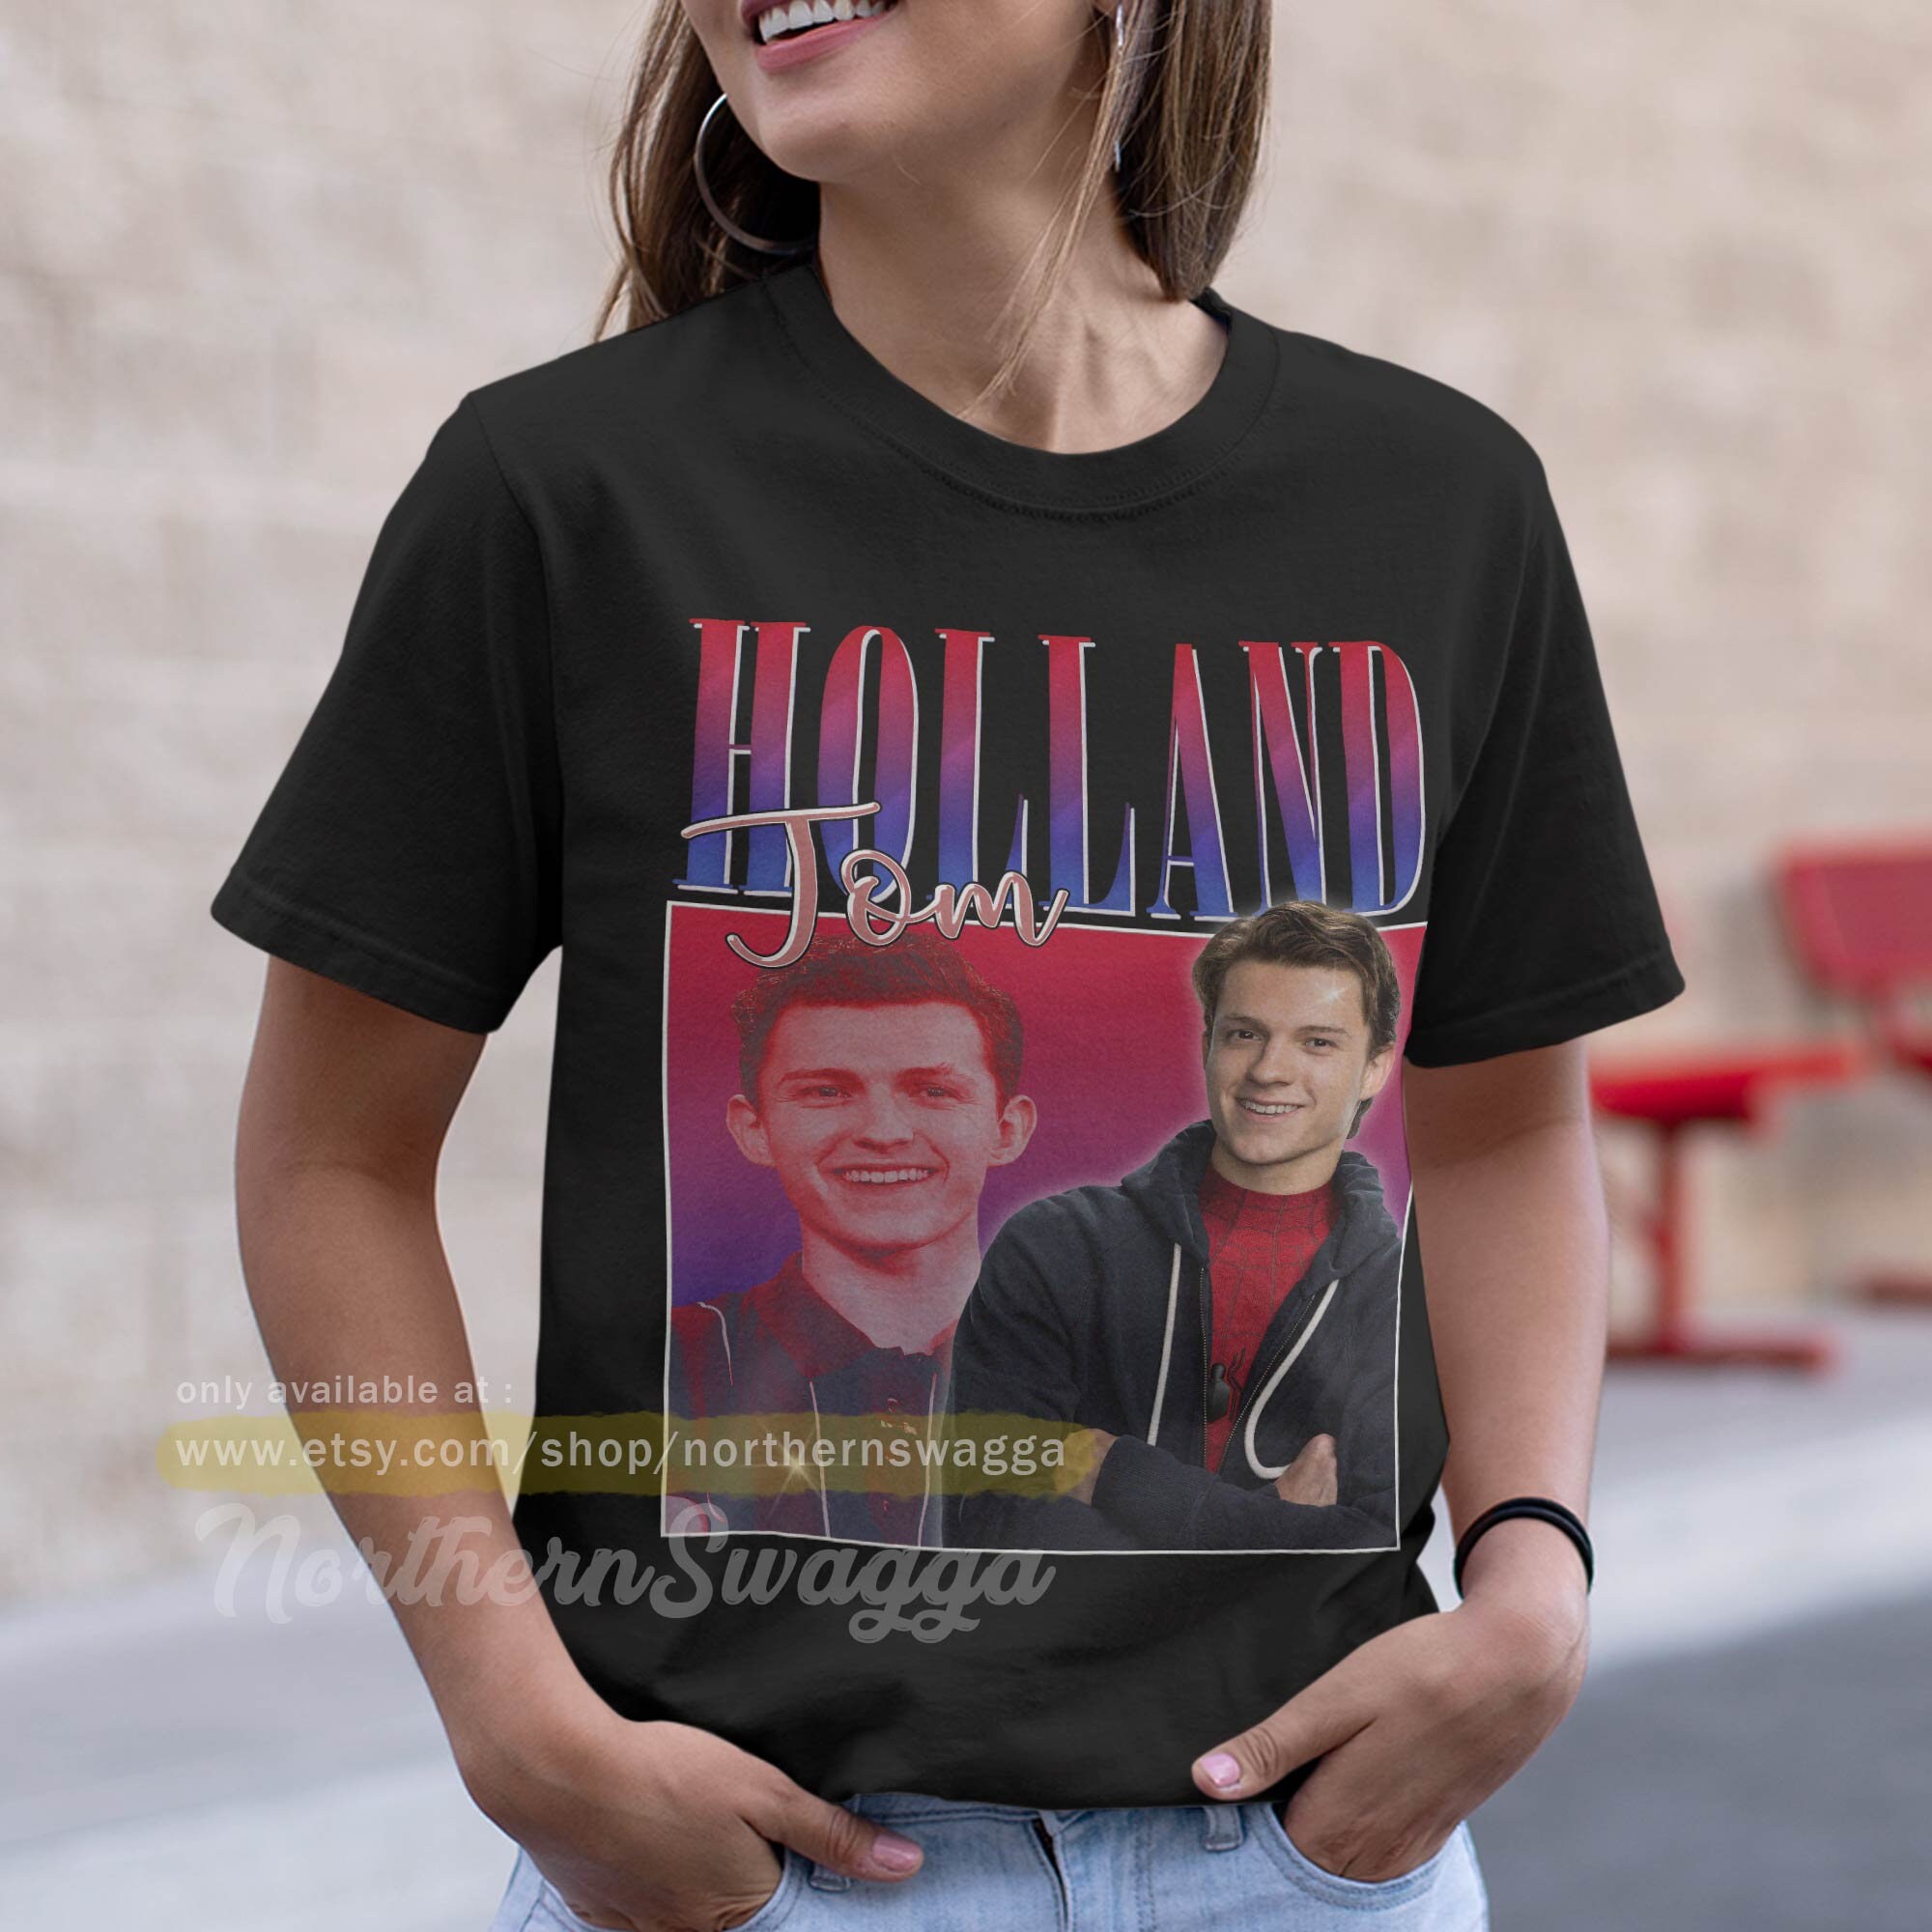 Tom holland shirt design retro style cool fan art t-shirt 90s poster 187 tee